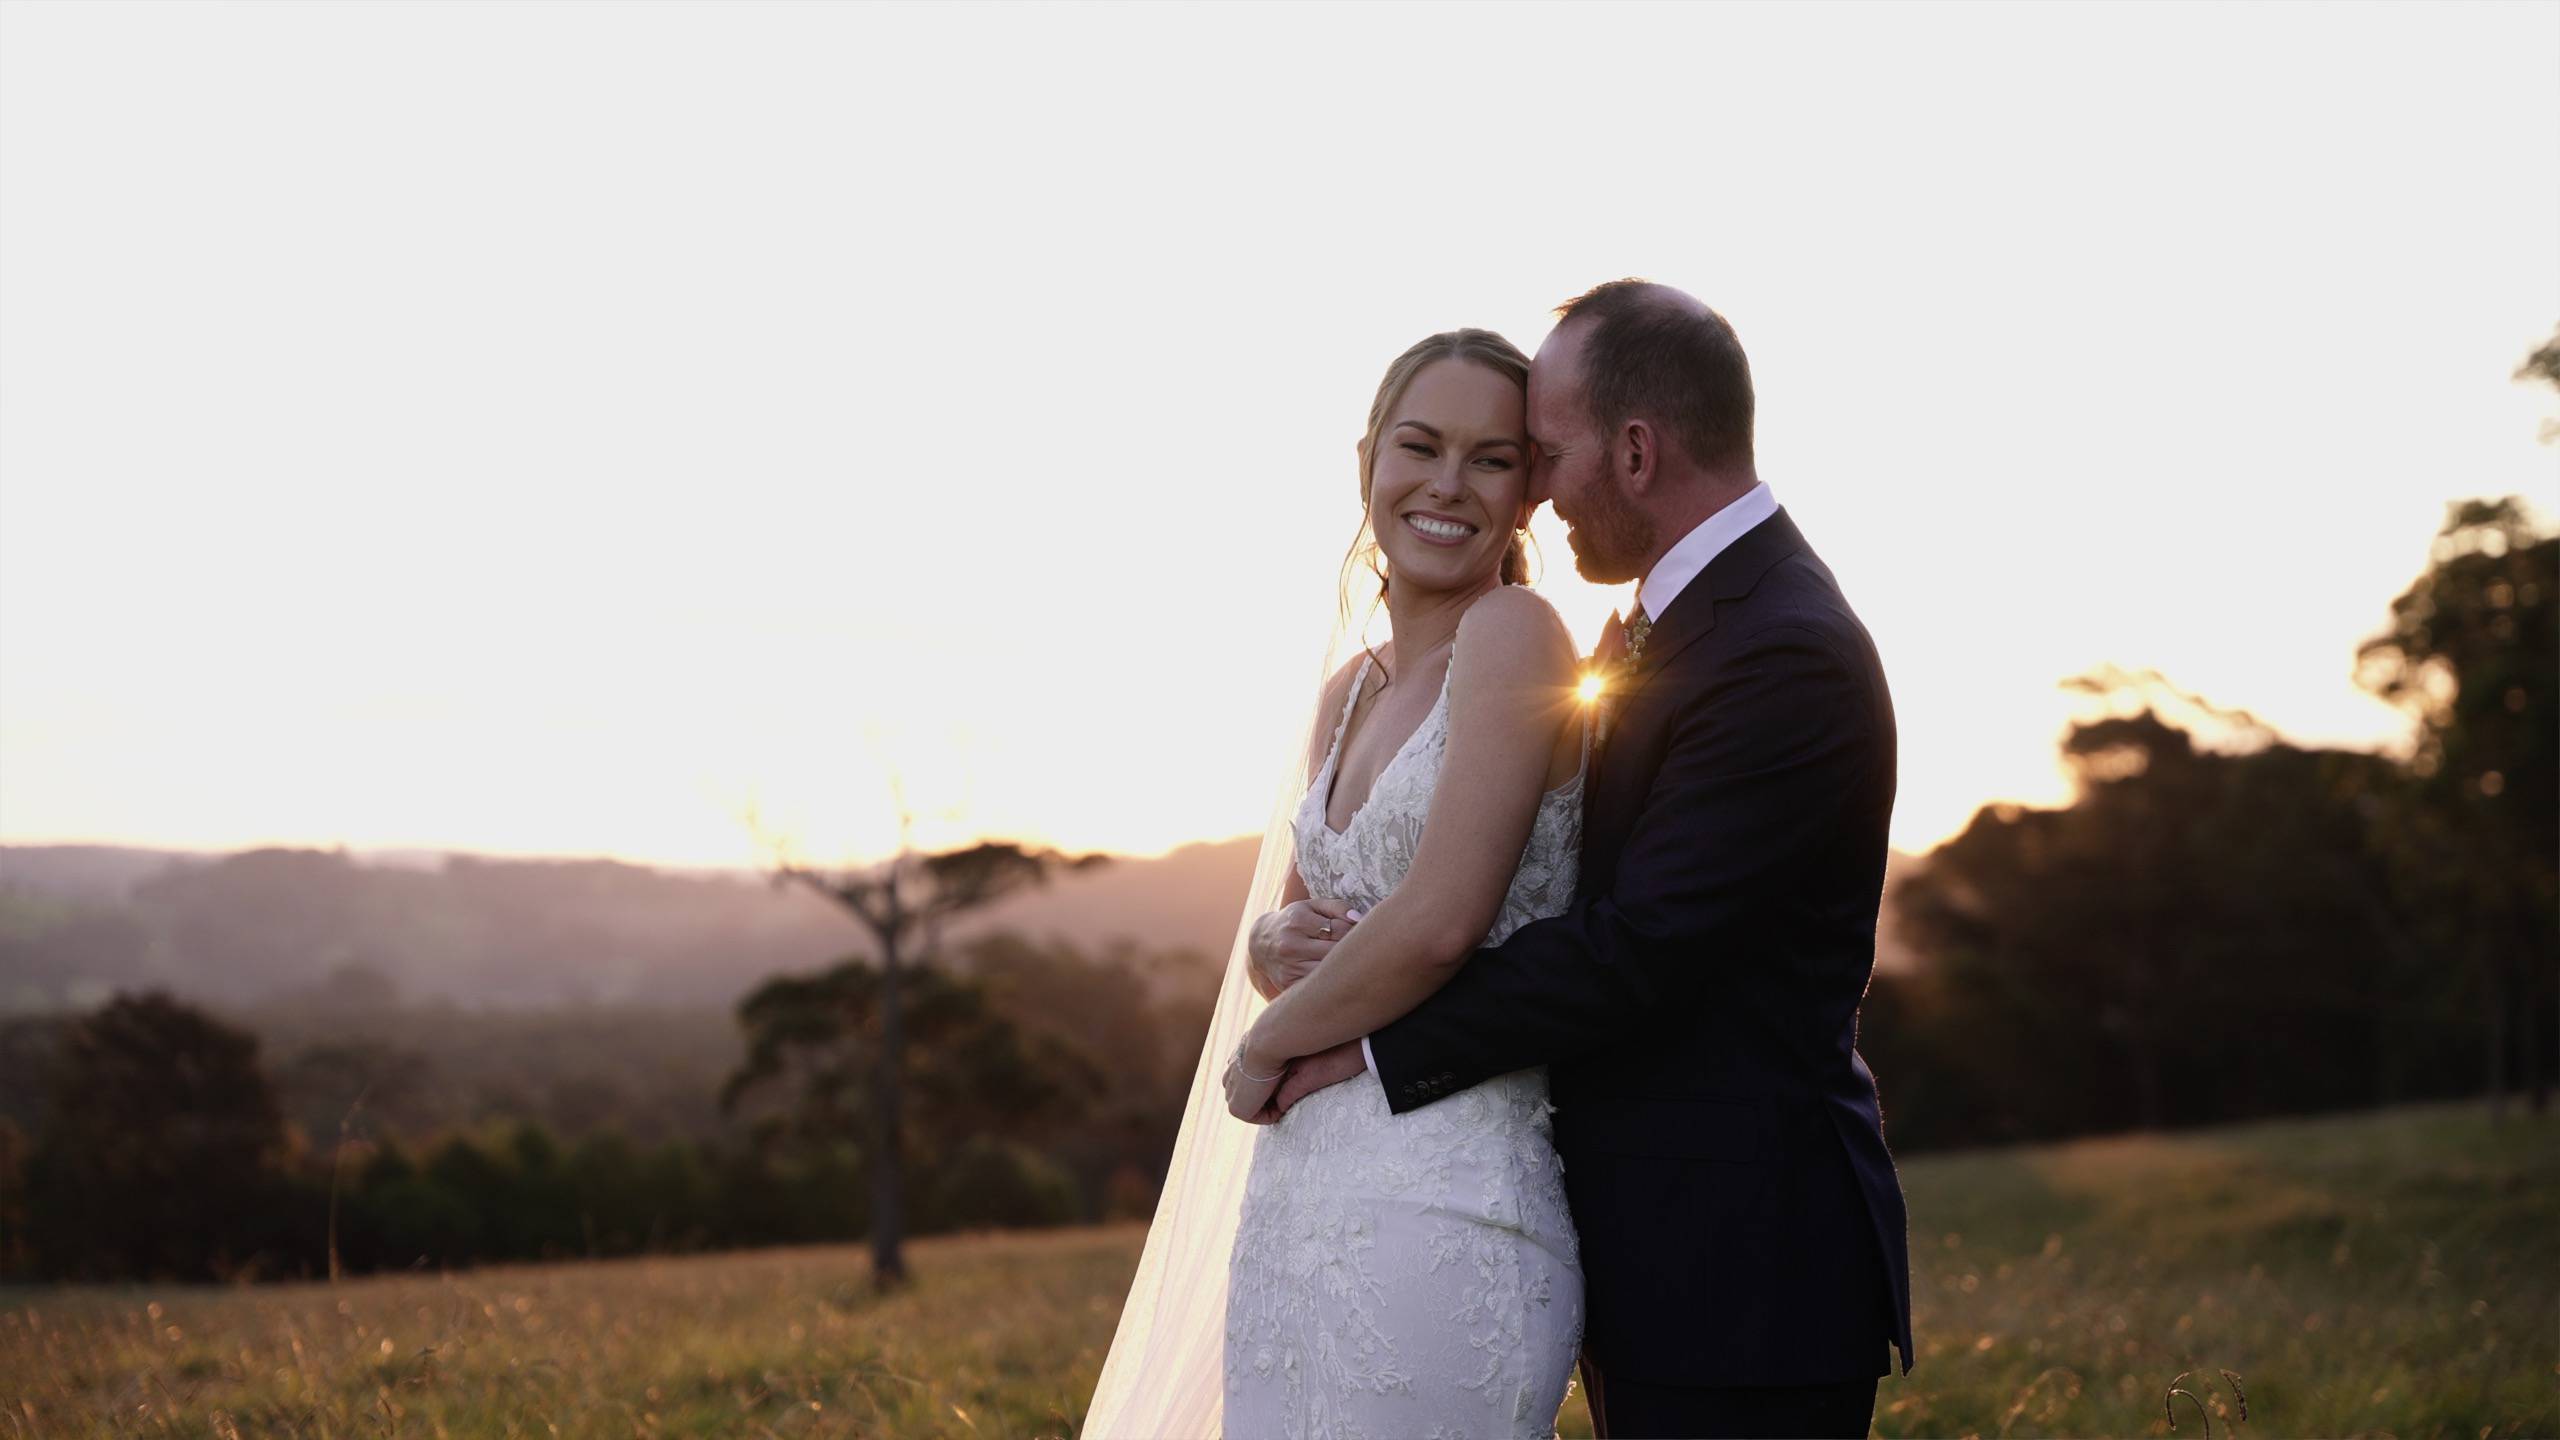 Sarah + James Short Film // Mali Brae Farm // Southern Highlands Wedding Videography